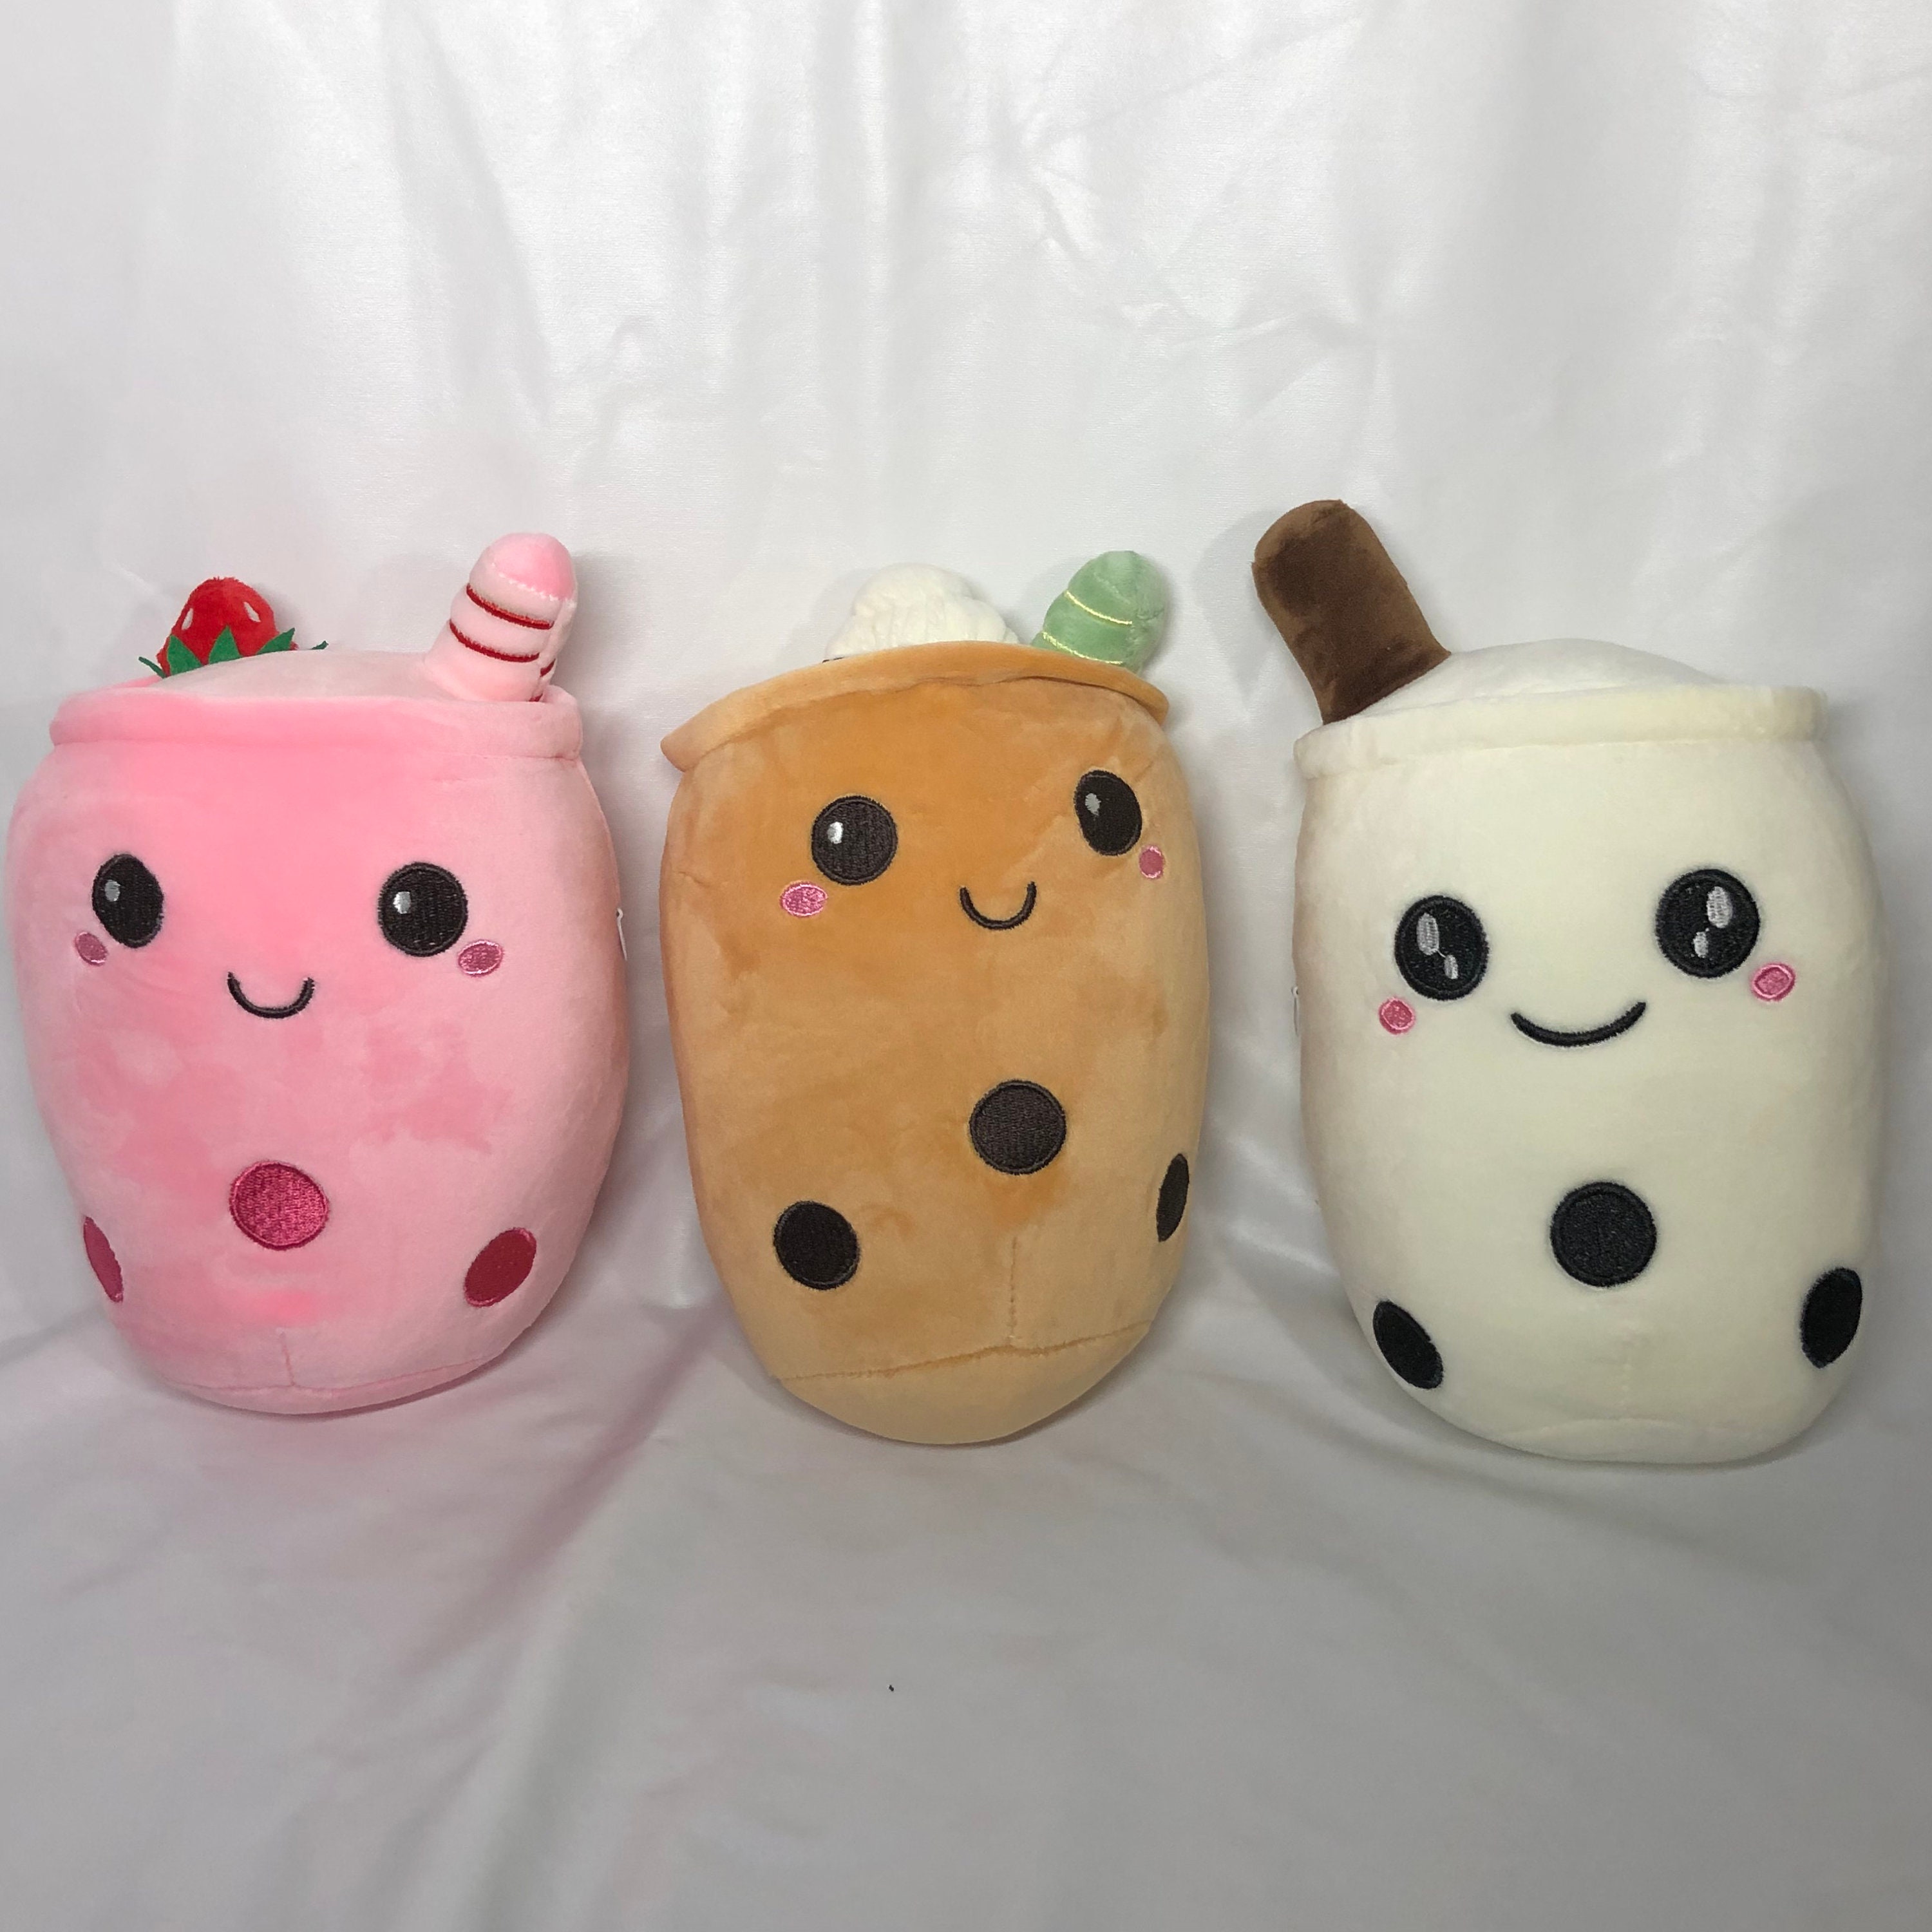 5 flavors M&m's Plush Pillows Kawaii Cute Stuffed Toys Funny M